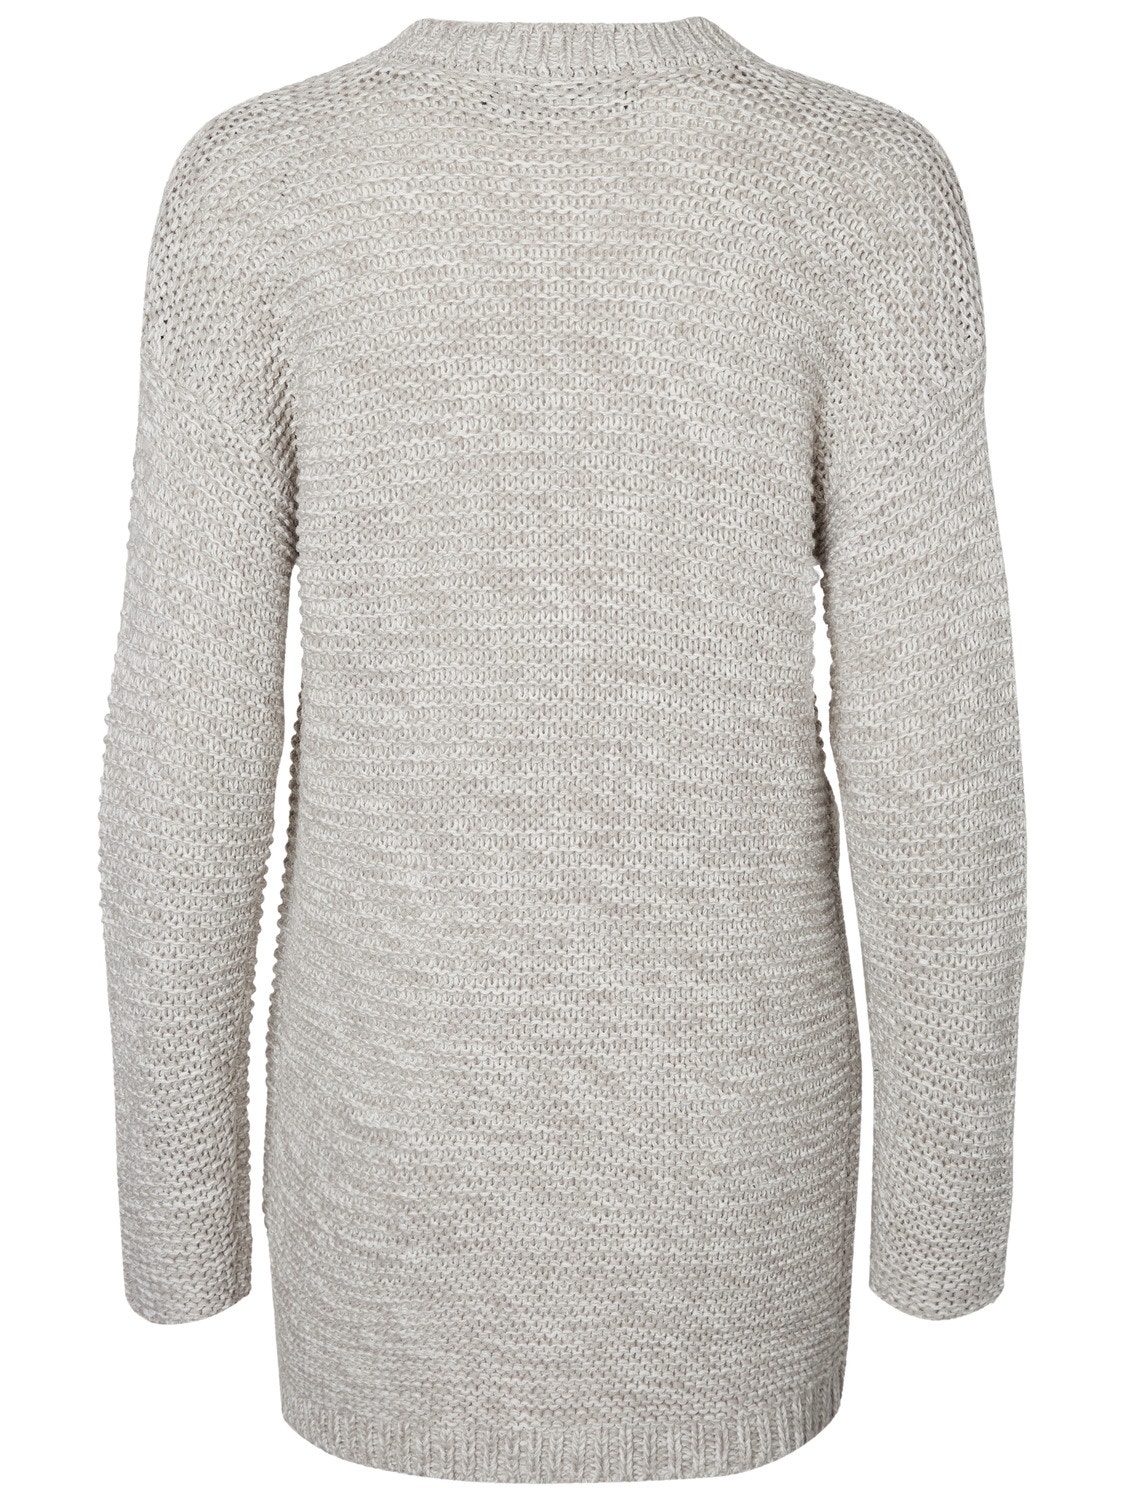 Vero Moda VMNO Knit Cardigan -Light Grey Melange - 10183605